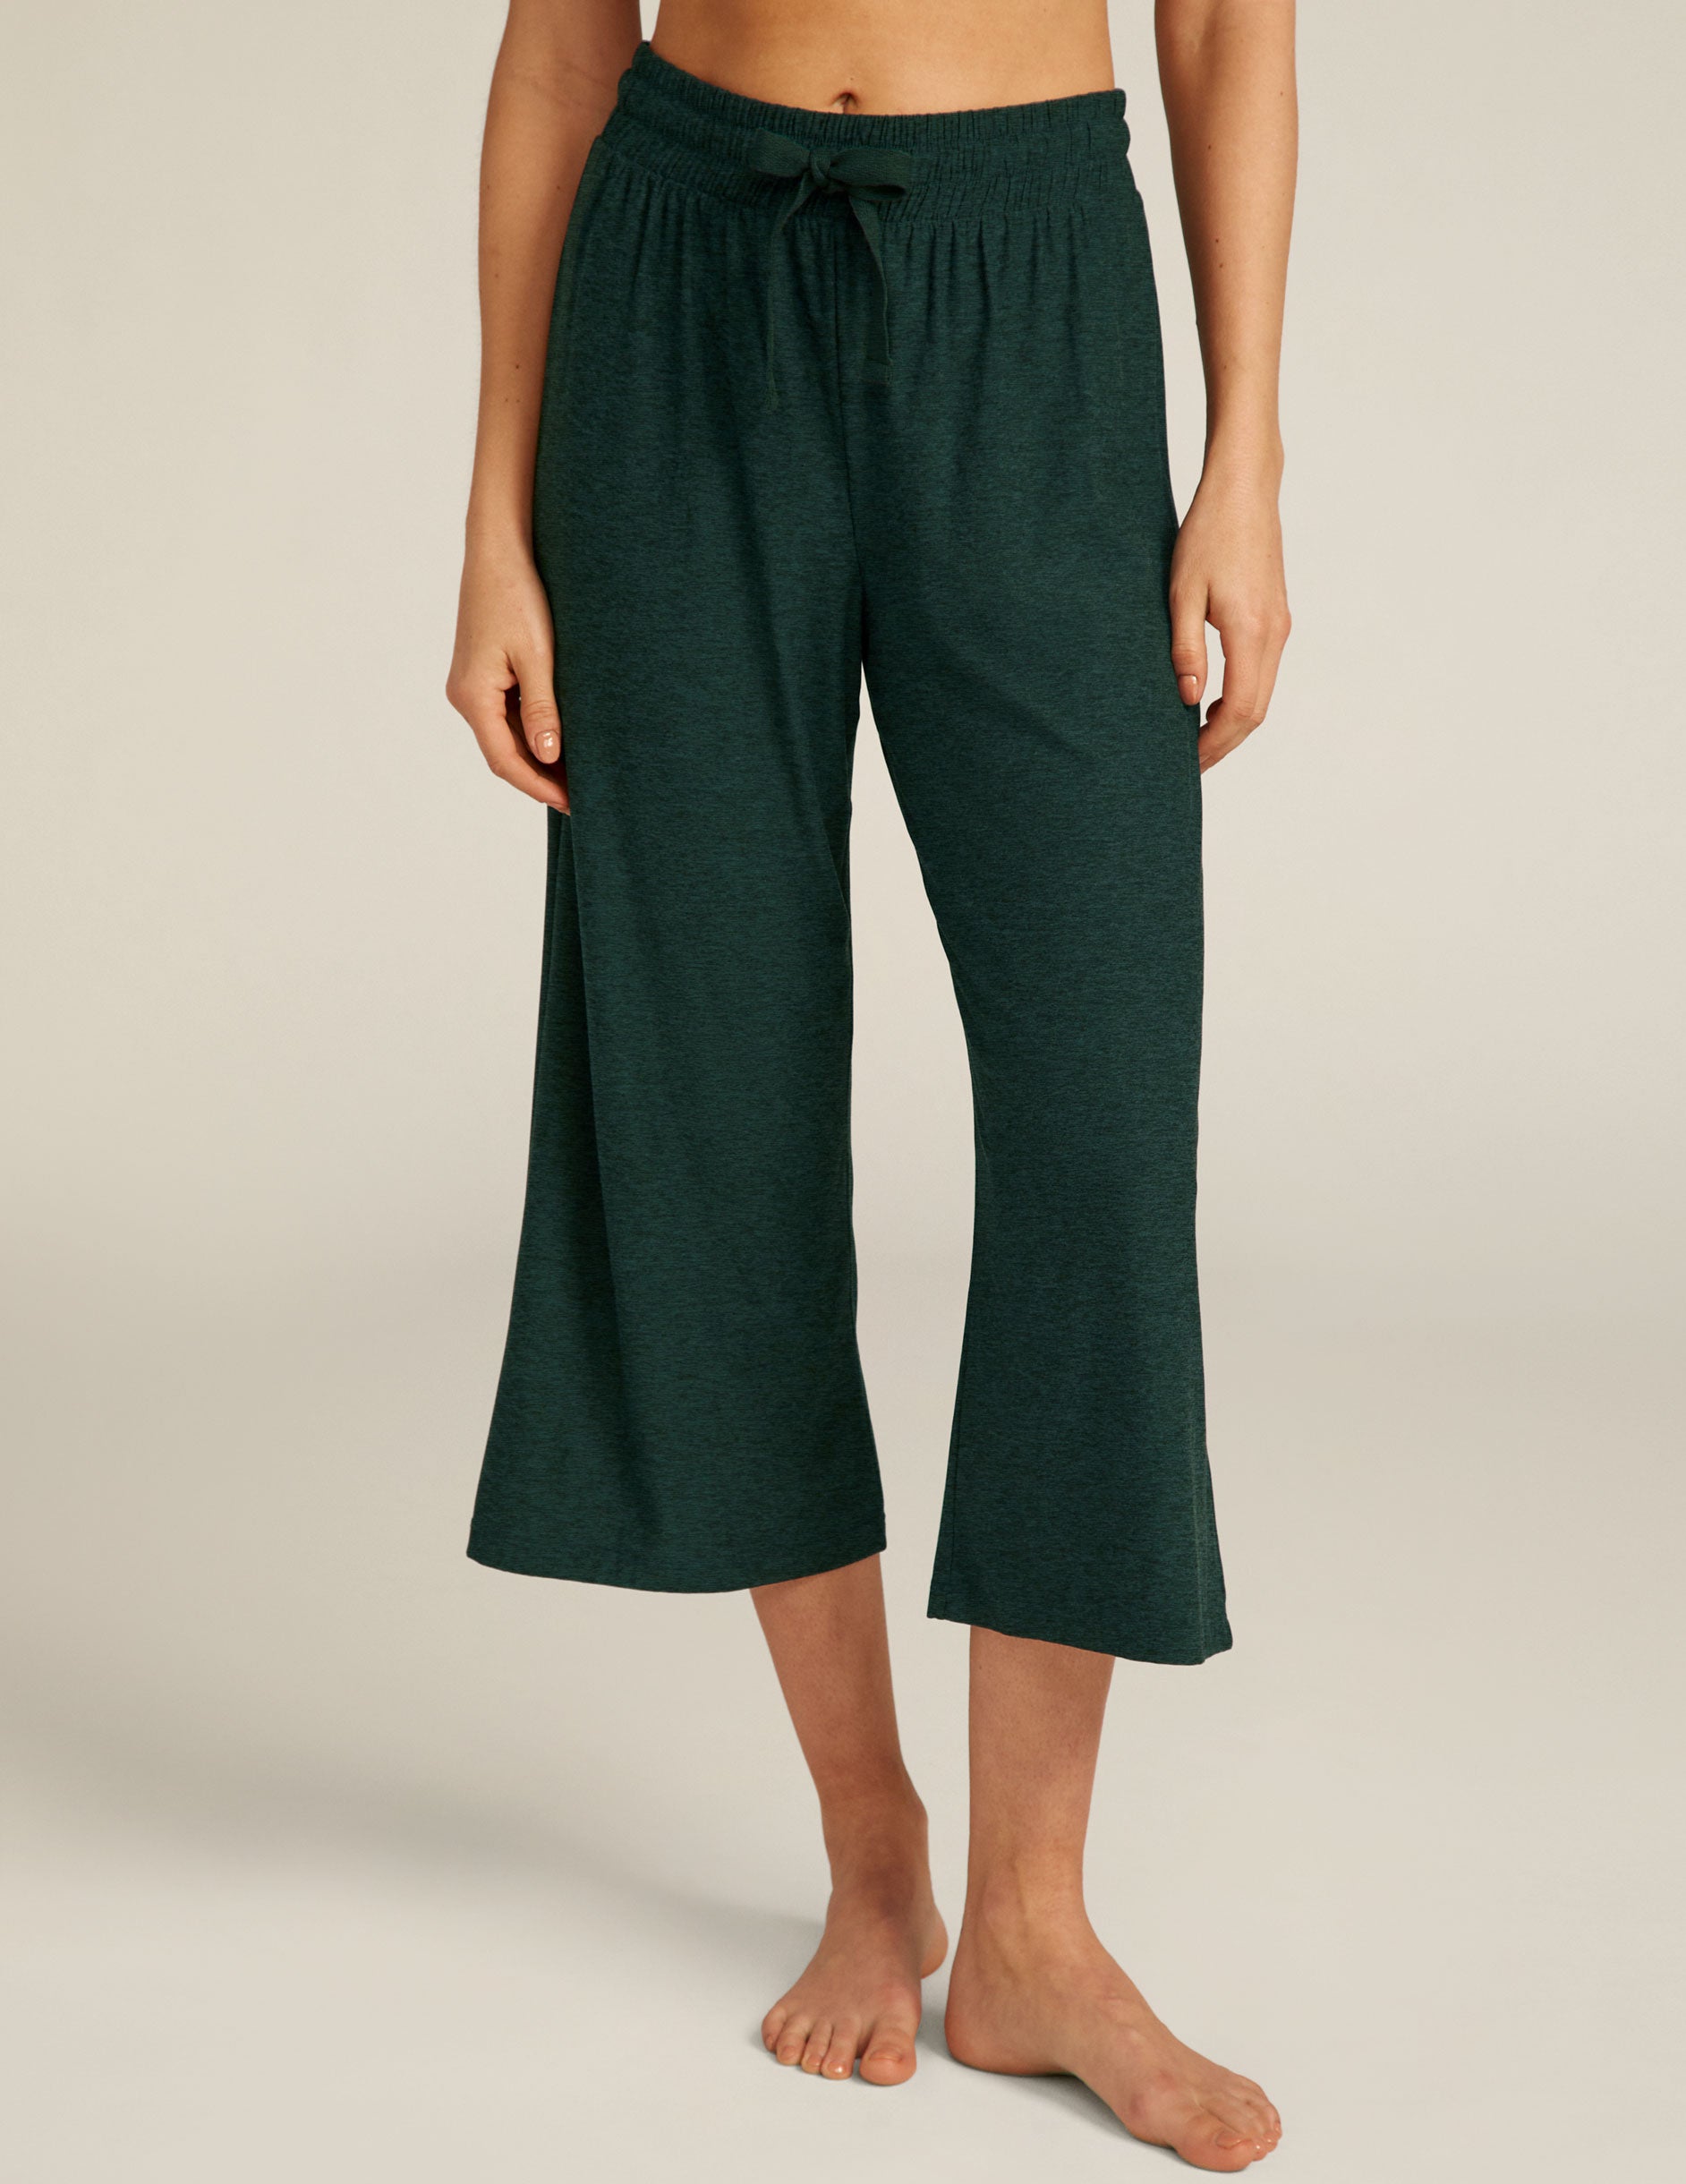 green capri length sleep pants with a drawstring at waistband. 